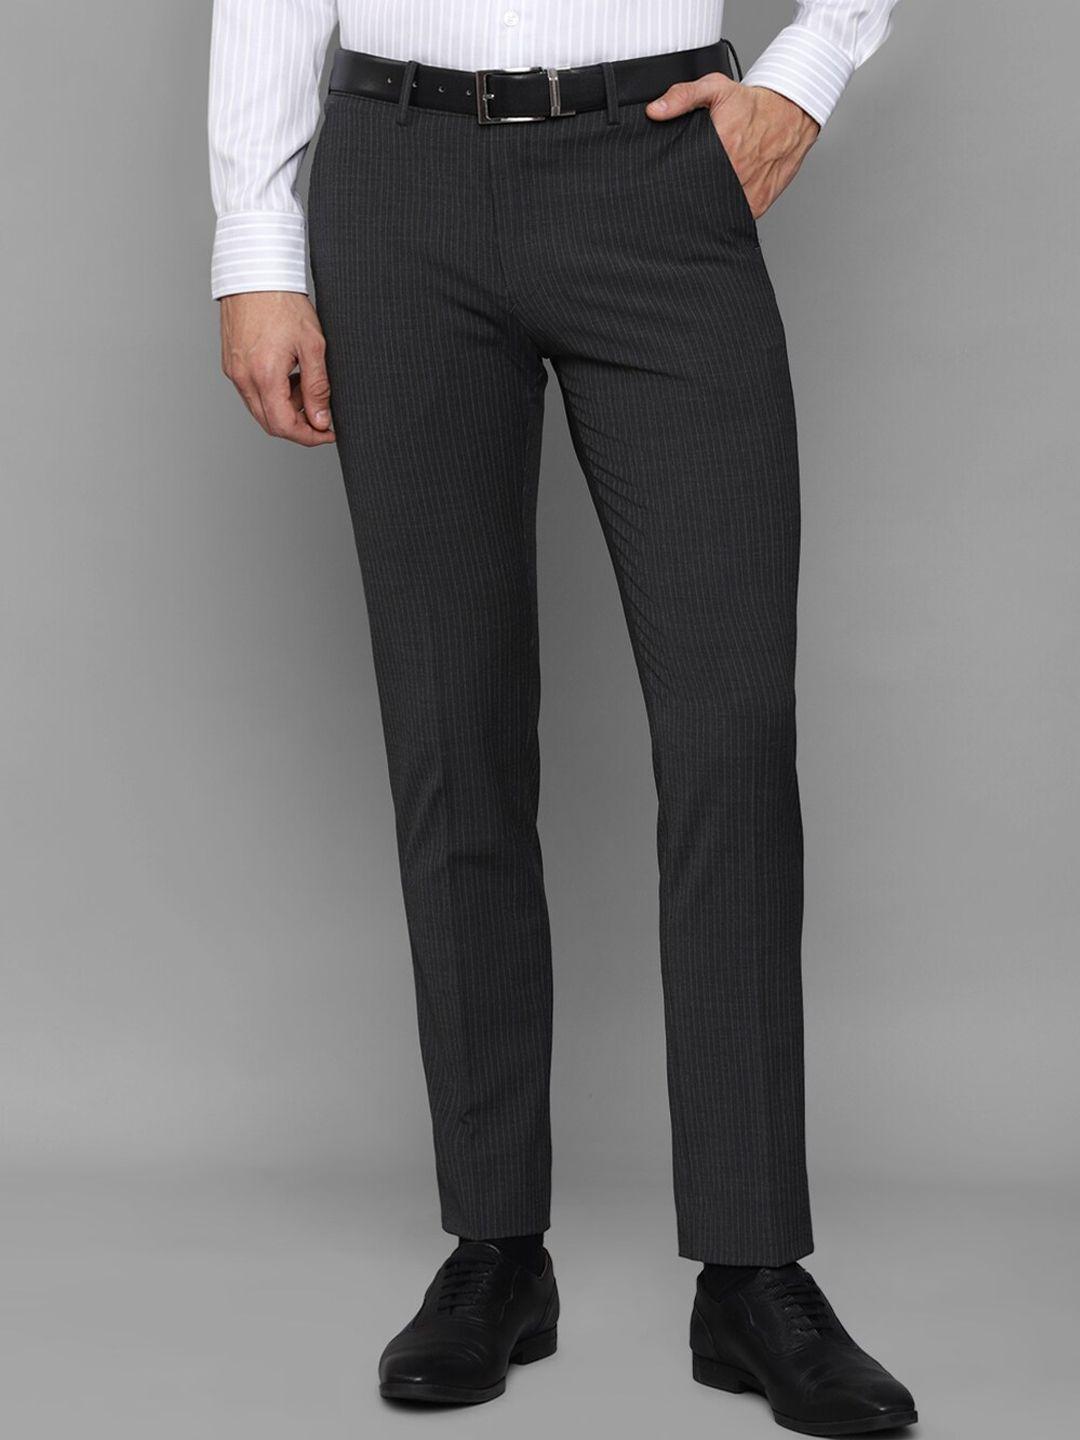 louis-philippe-men-black-striped-slim-fit-trousers